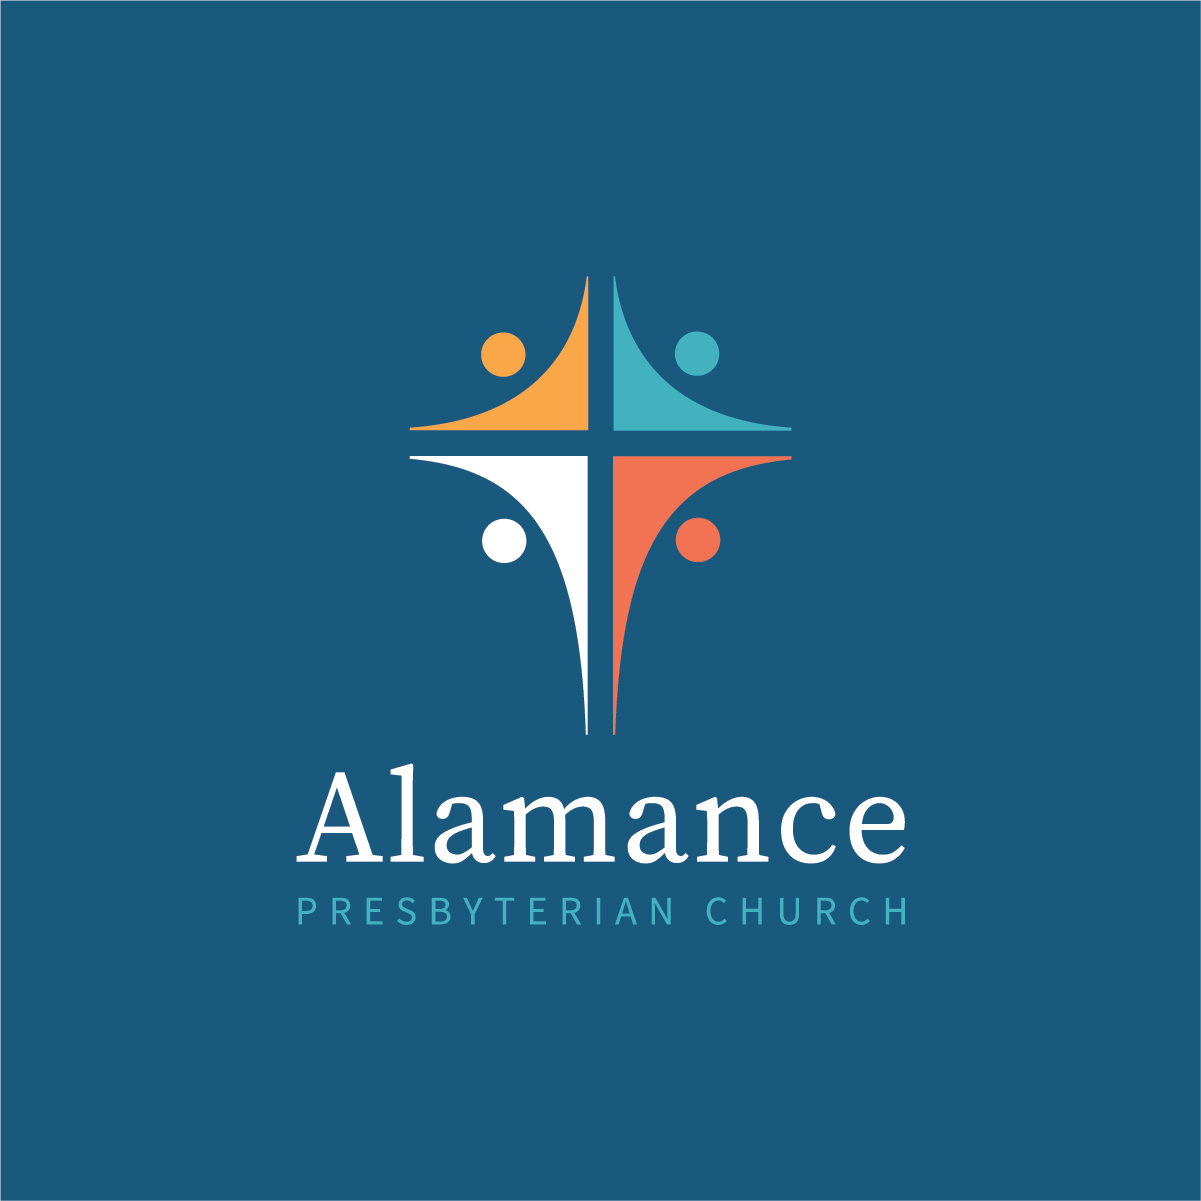 Alamance Presbyterian Church